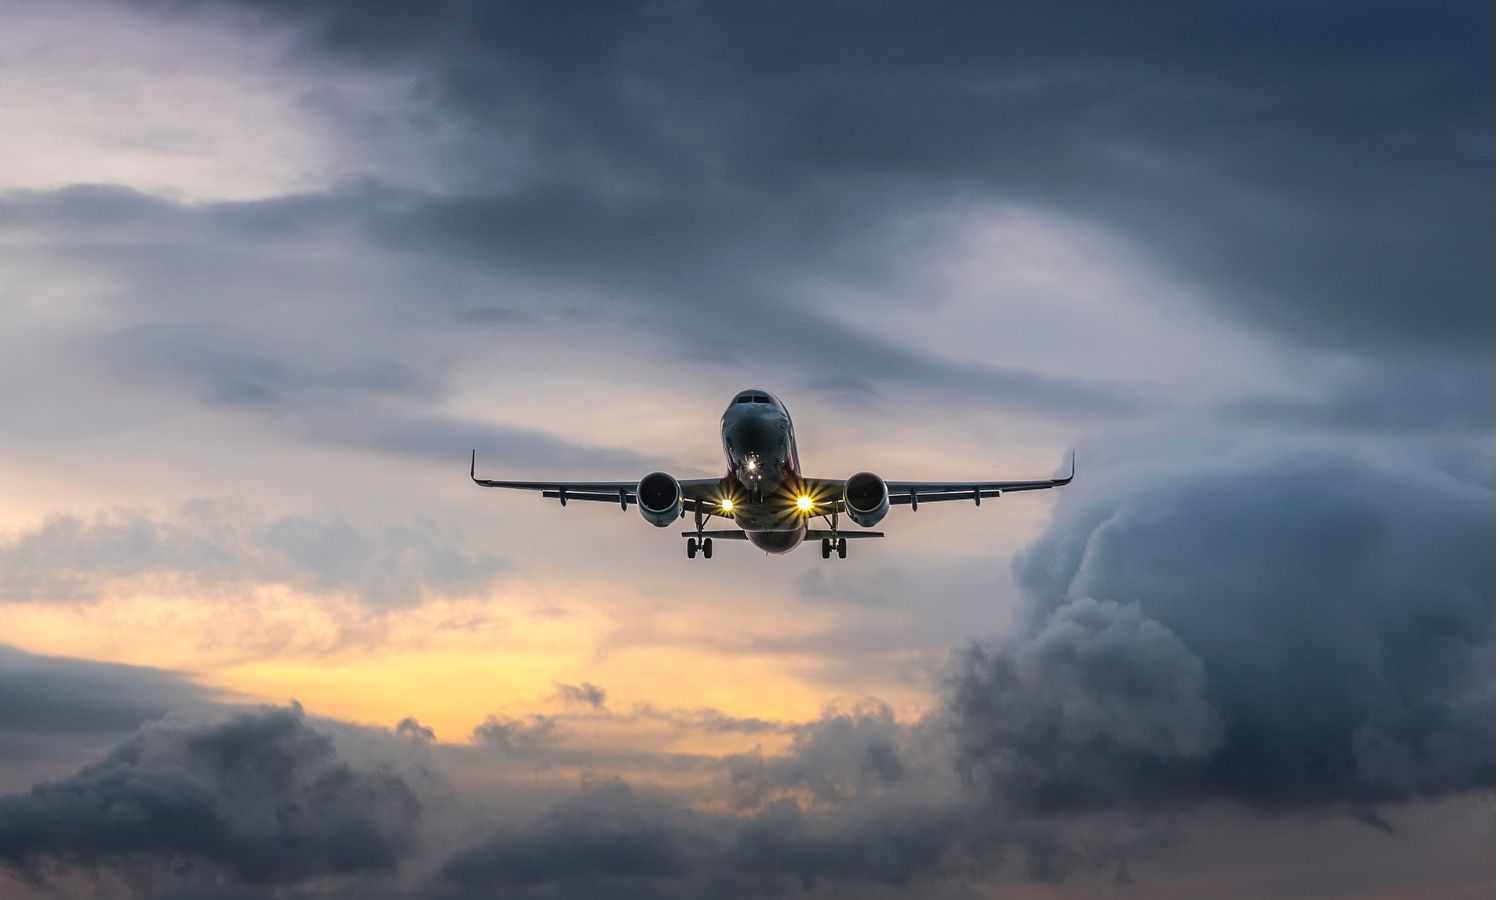 Can turbulence crash a plane